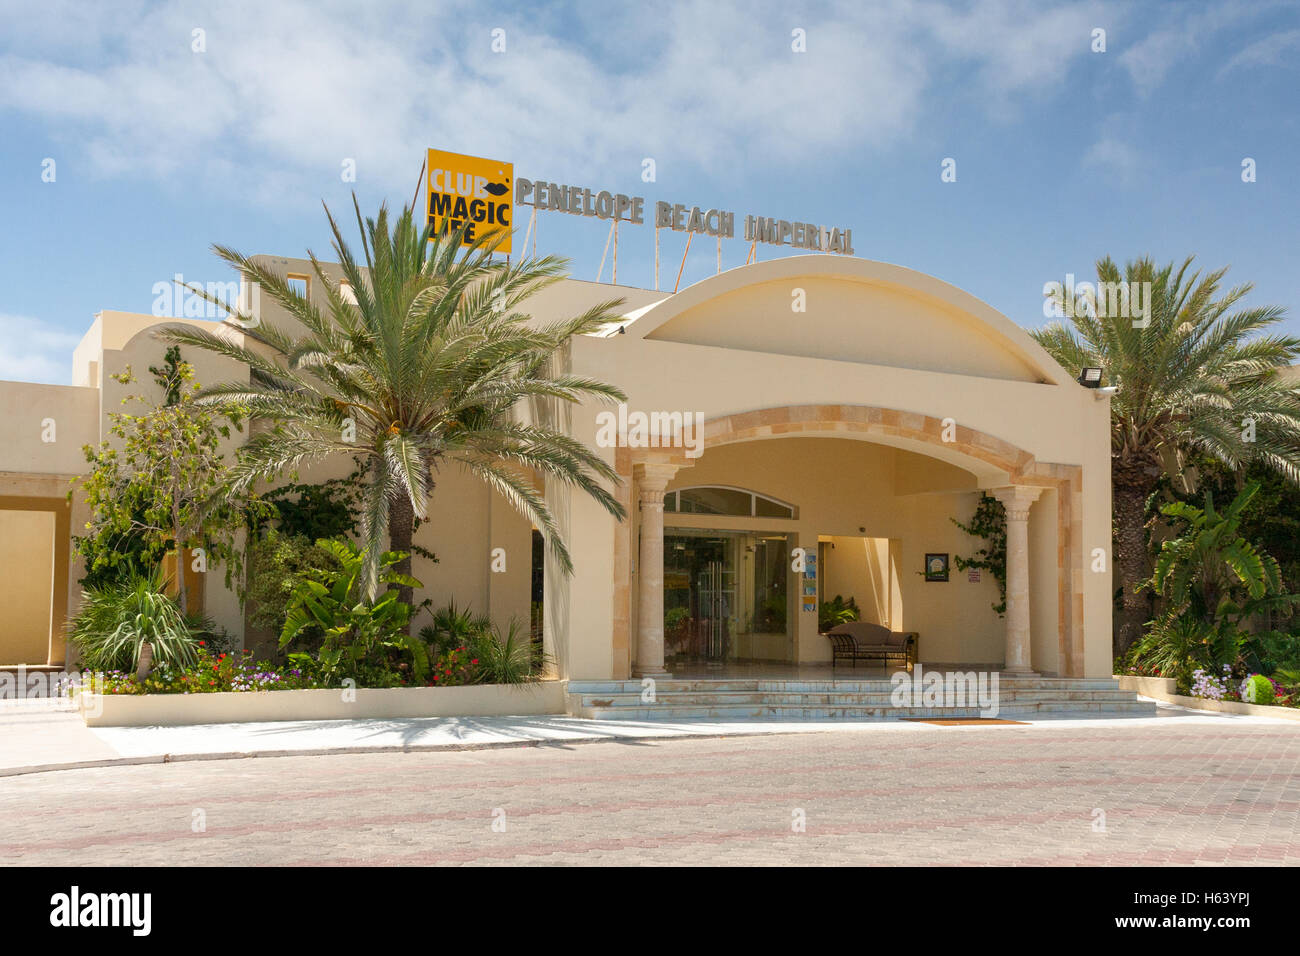 Entrance to Hotel Penelope Beach Imperial in Djerba, Tunisia Stock Photo